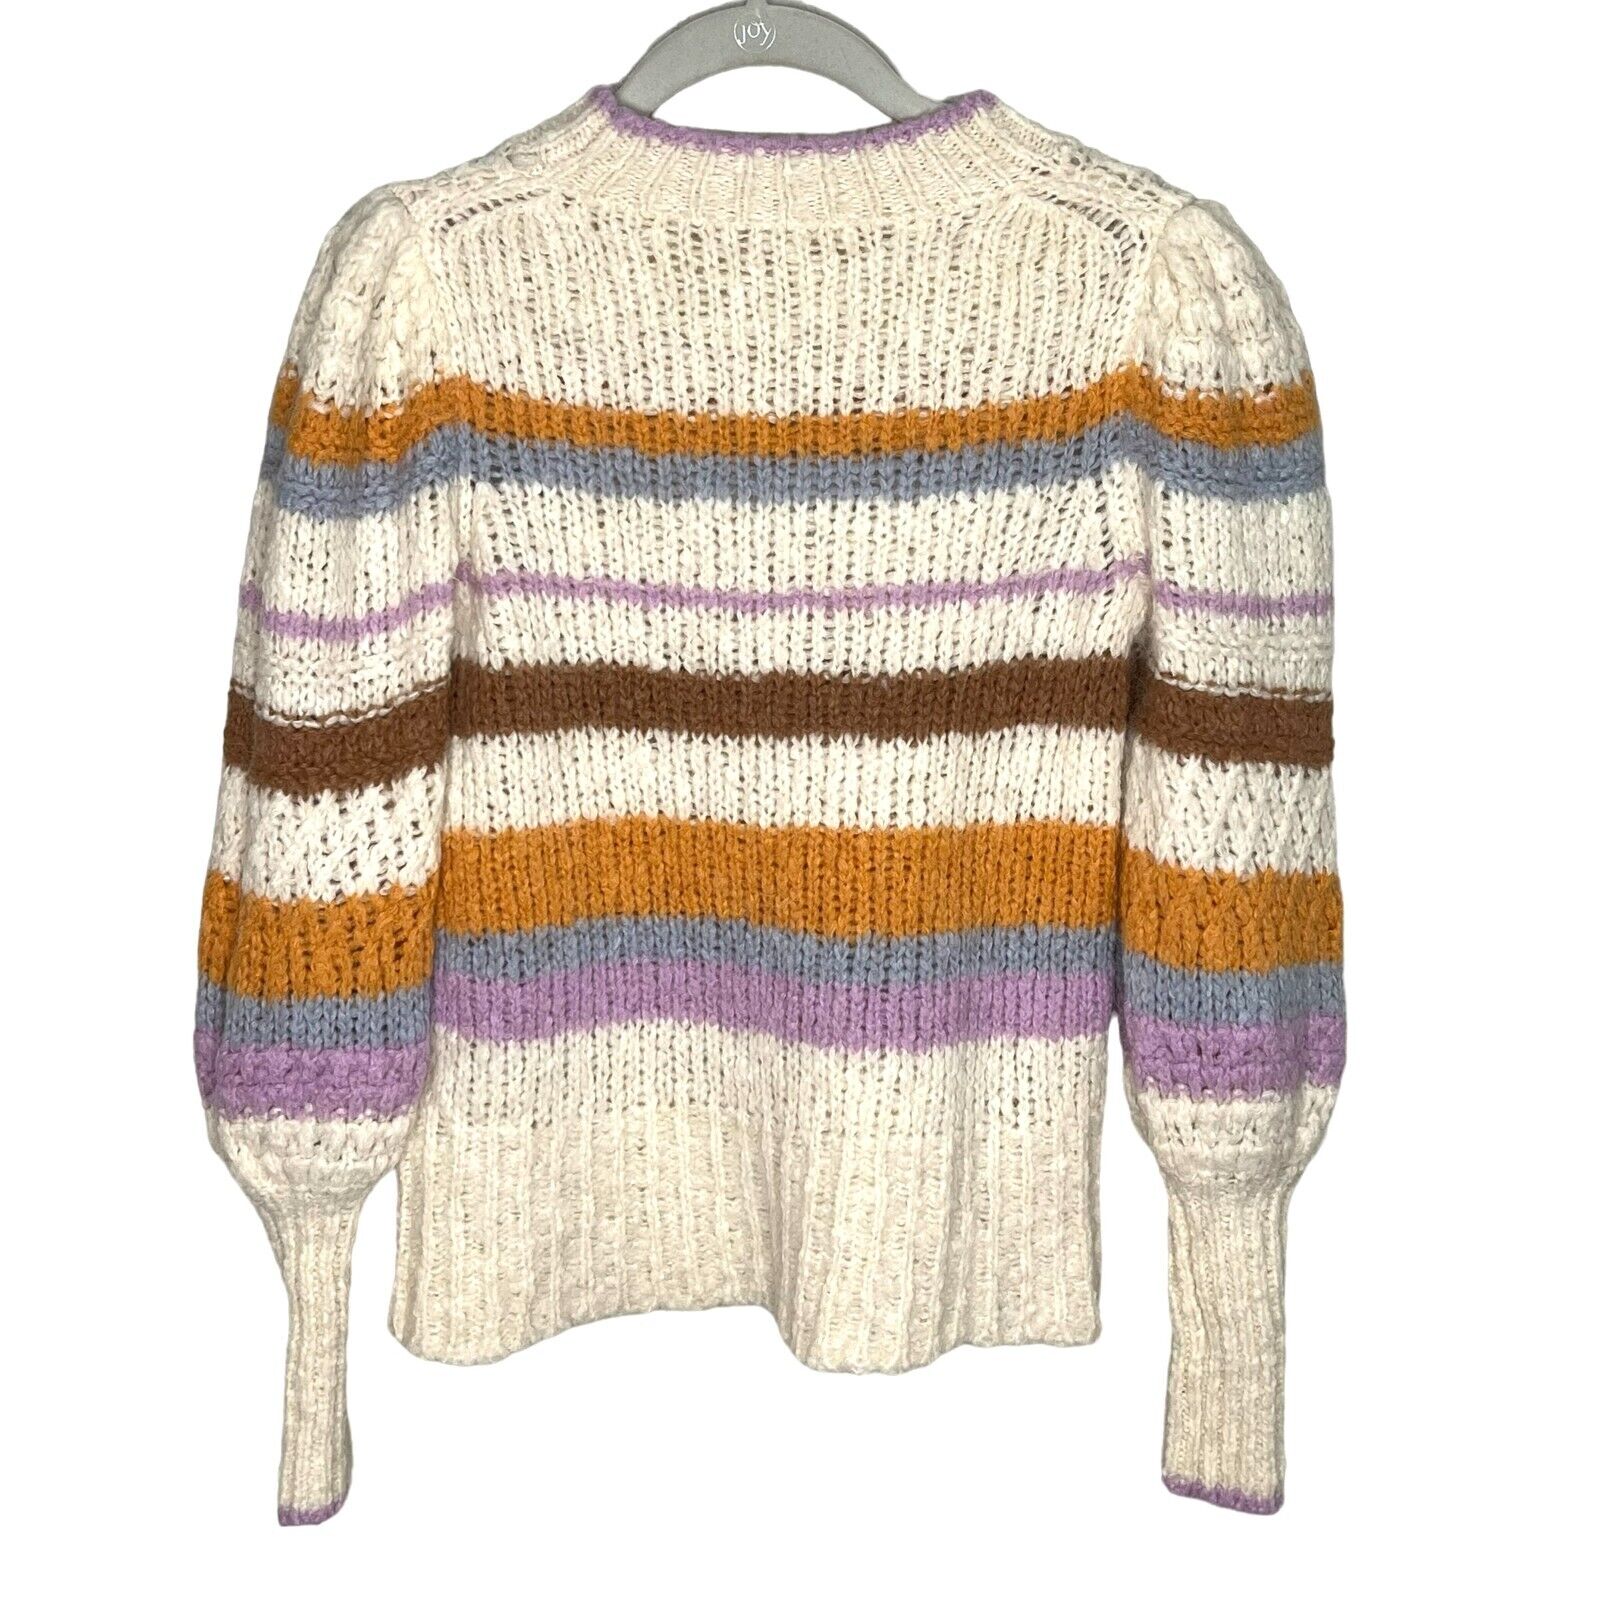 REBECCA TAYLOR Multicolor Fluffy Striped Puff Sleeve Pullover Sweater Size Small